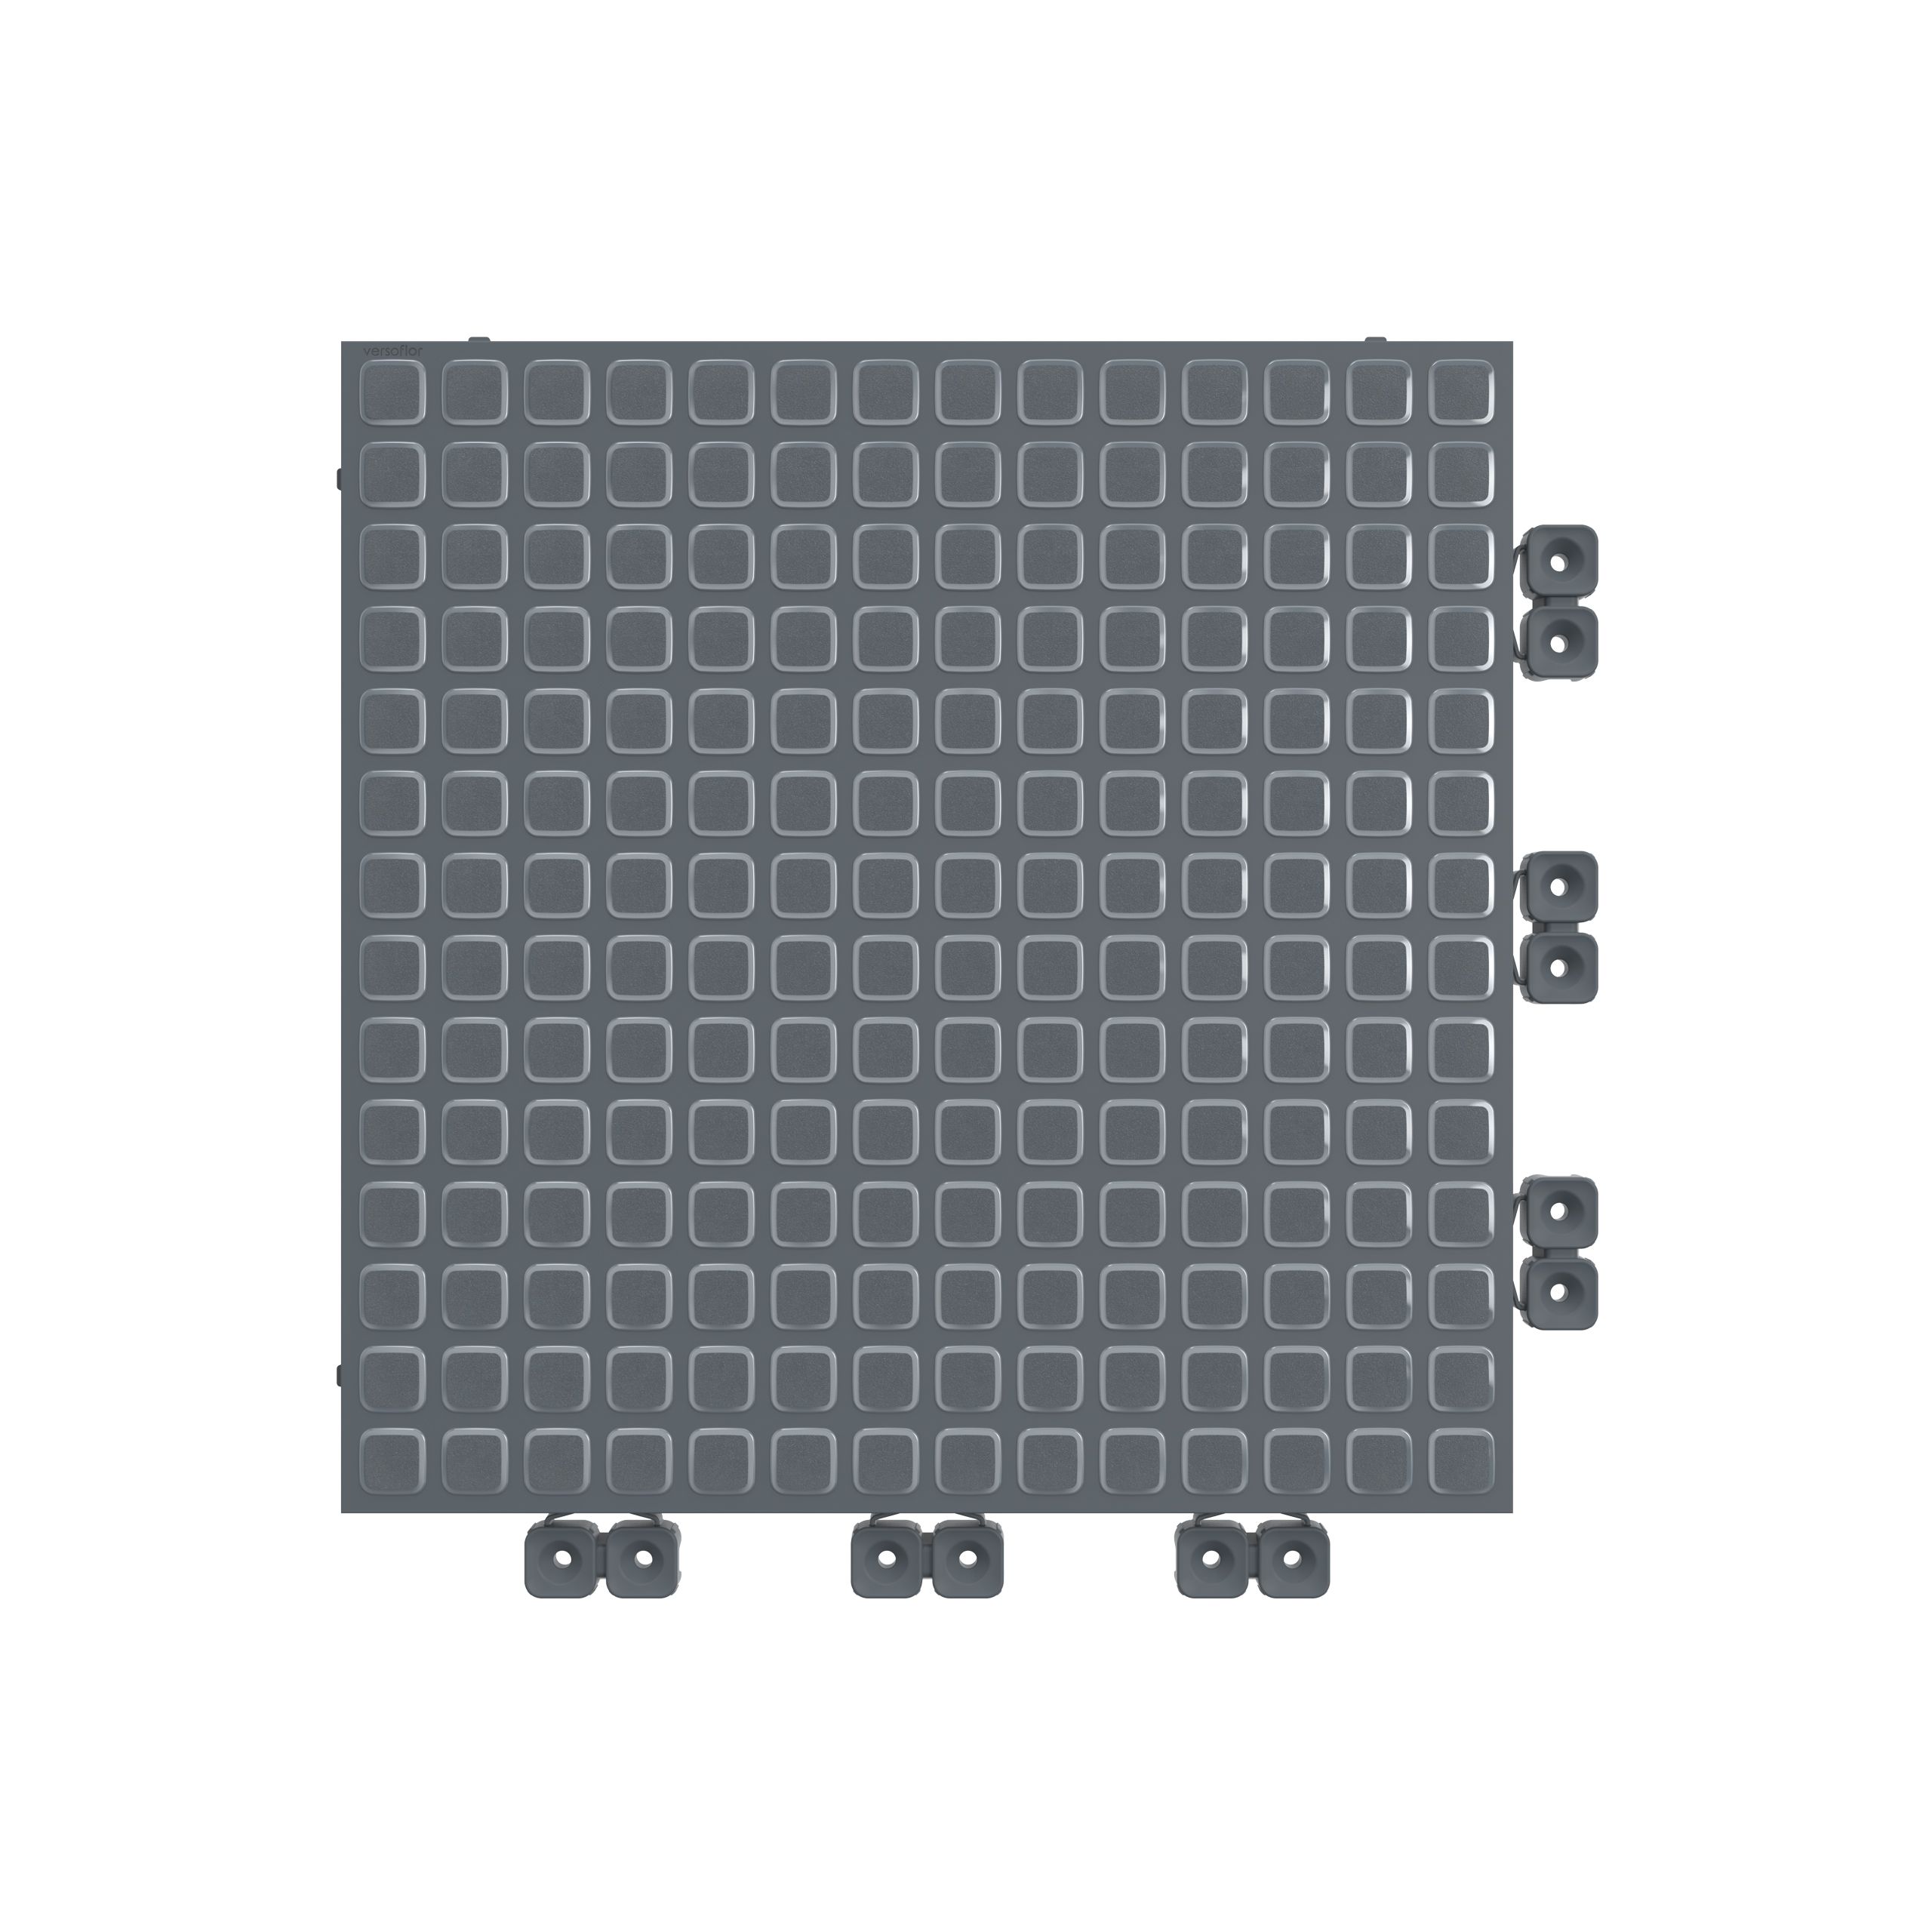 Versoflor Taskflor Graphite grey Interlocking floor tile 1m², Pack of 9